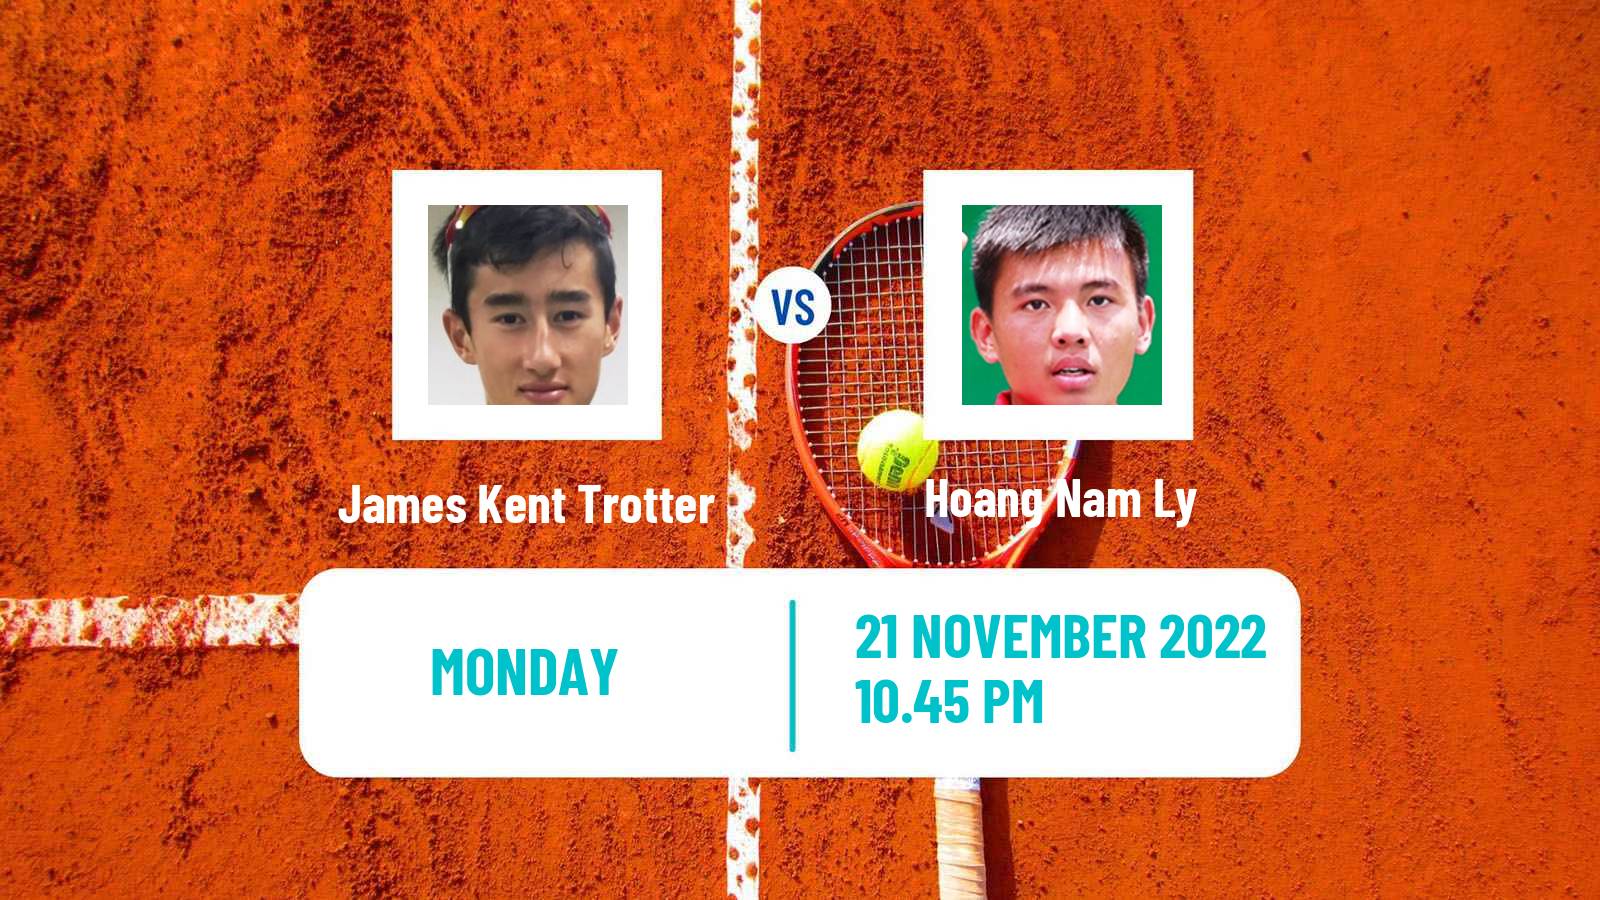 Tennis ATP Challenger James Kent Trotter - Hoang Nam Ly